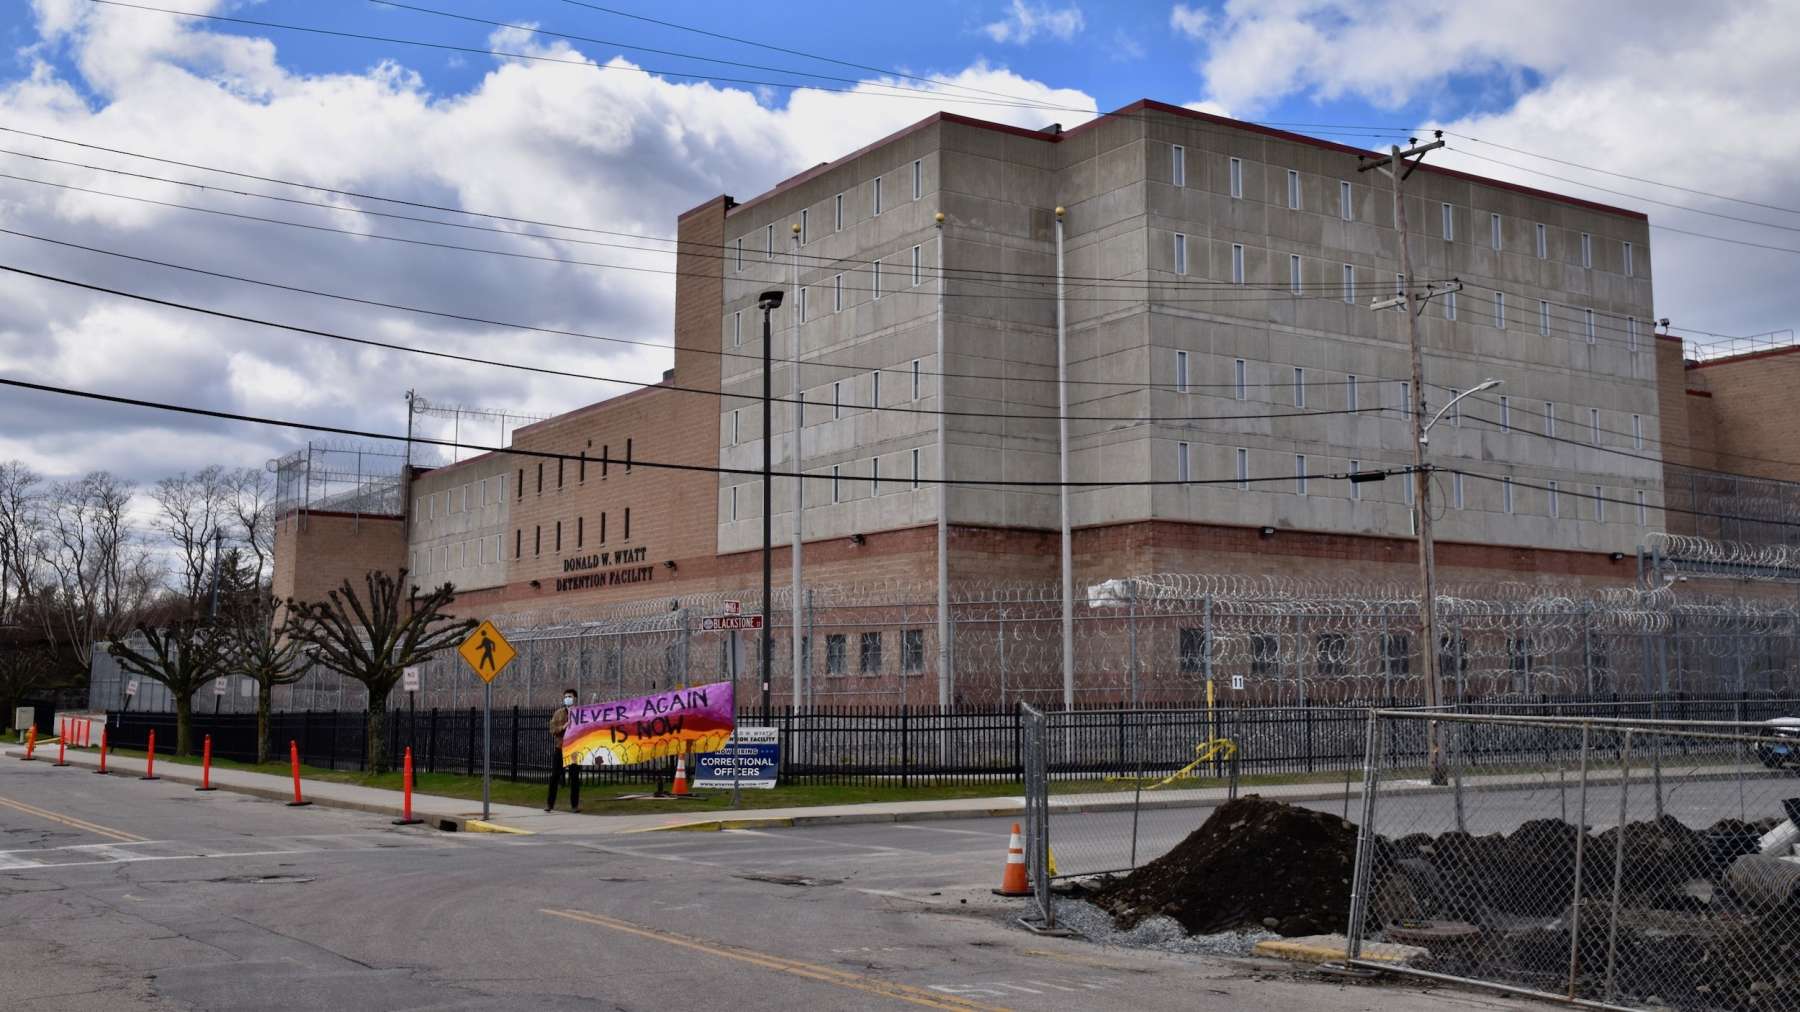 Rhode Island News: Judge orders immediate bail hearings for ICE detainees at Wyatt Detention Center